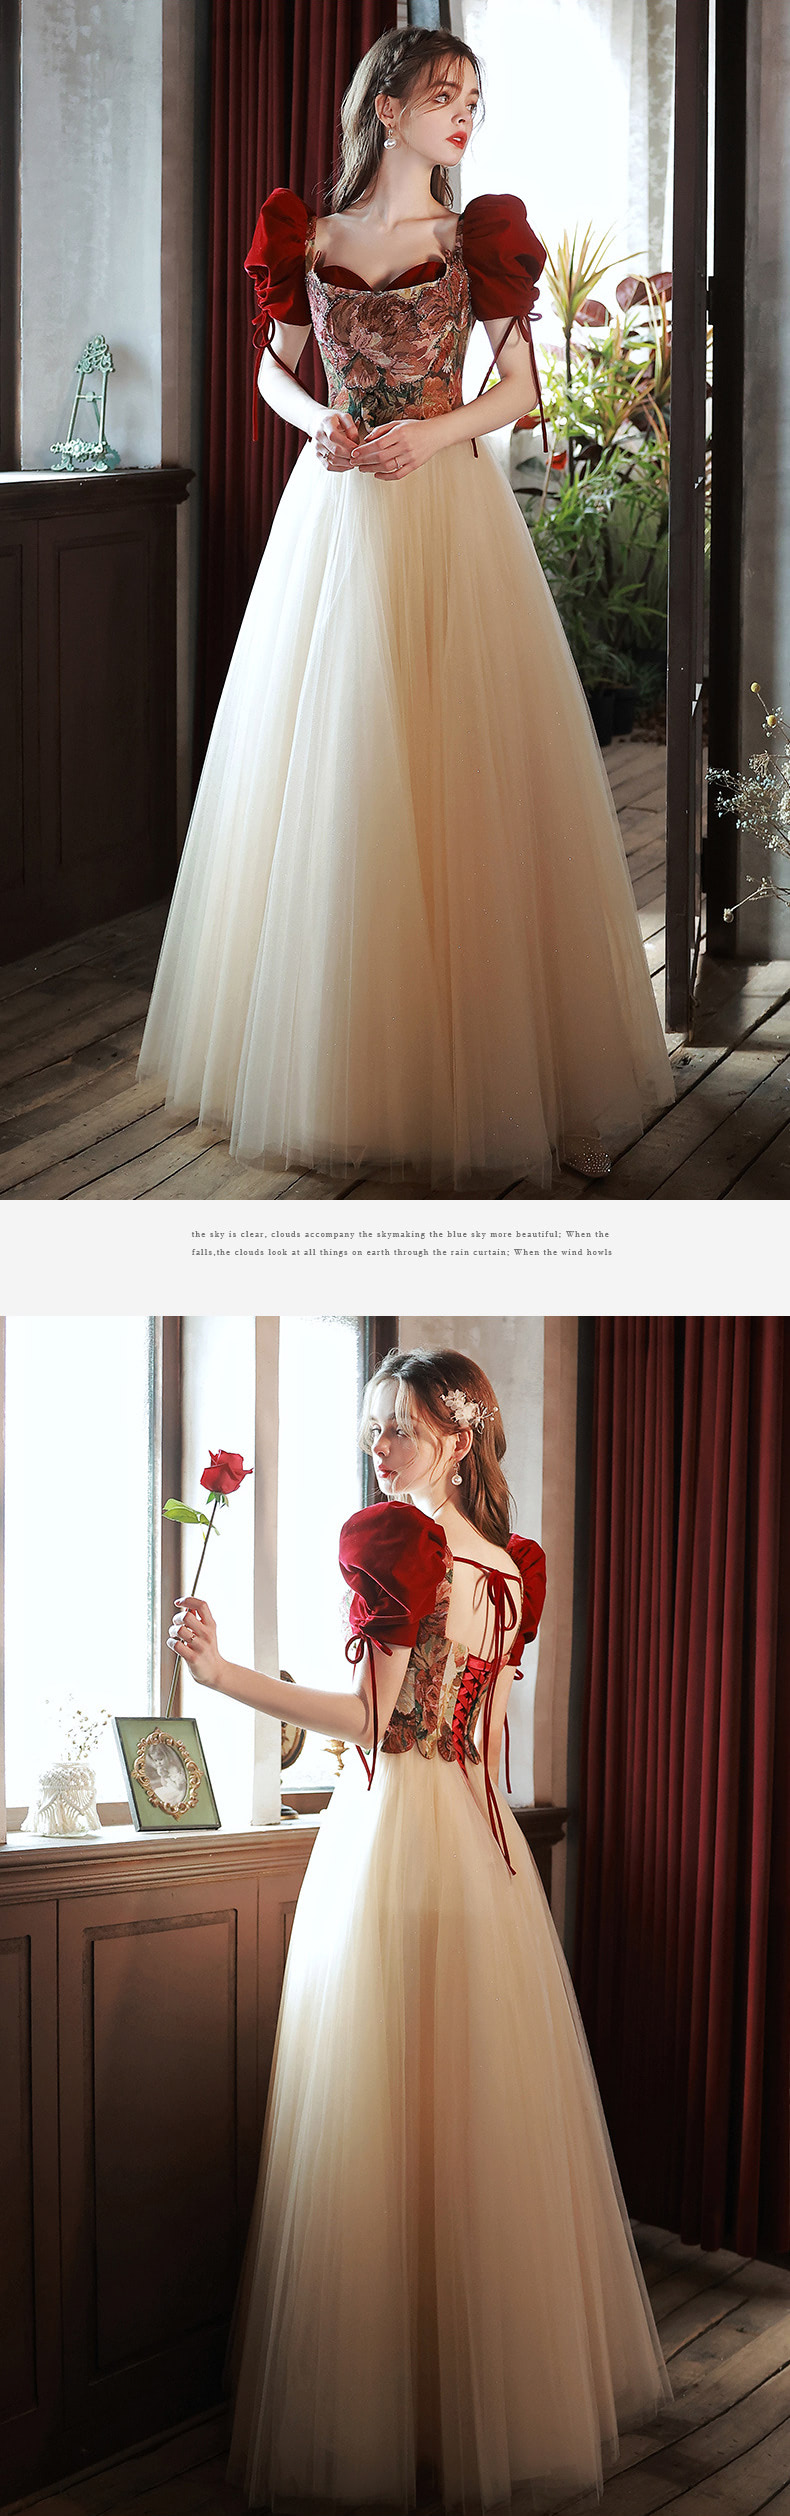 Romantic-Vintage-Style-Charming-Evening-Formal-Prom-Long-Dress13.jpg